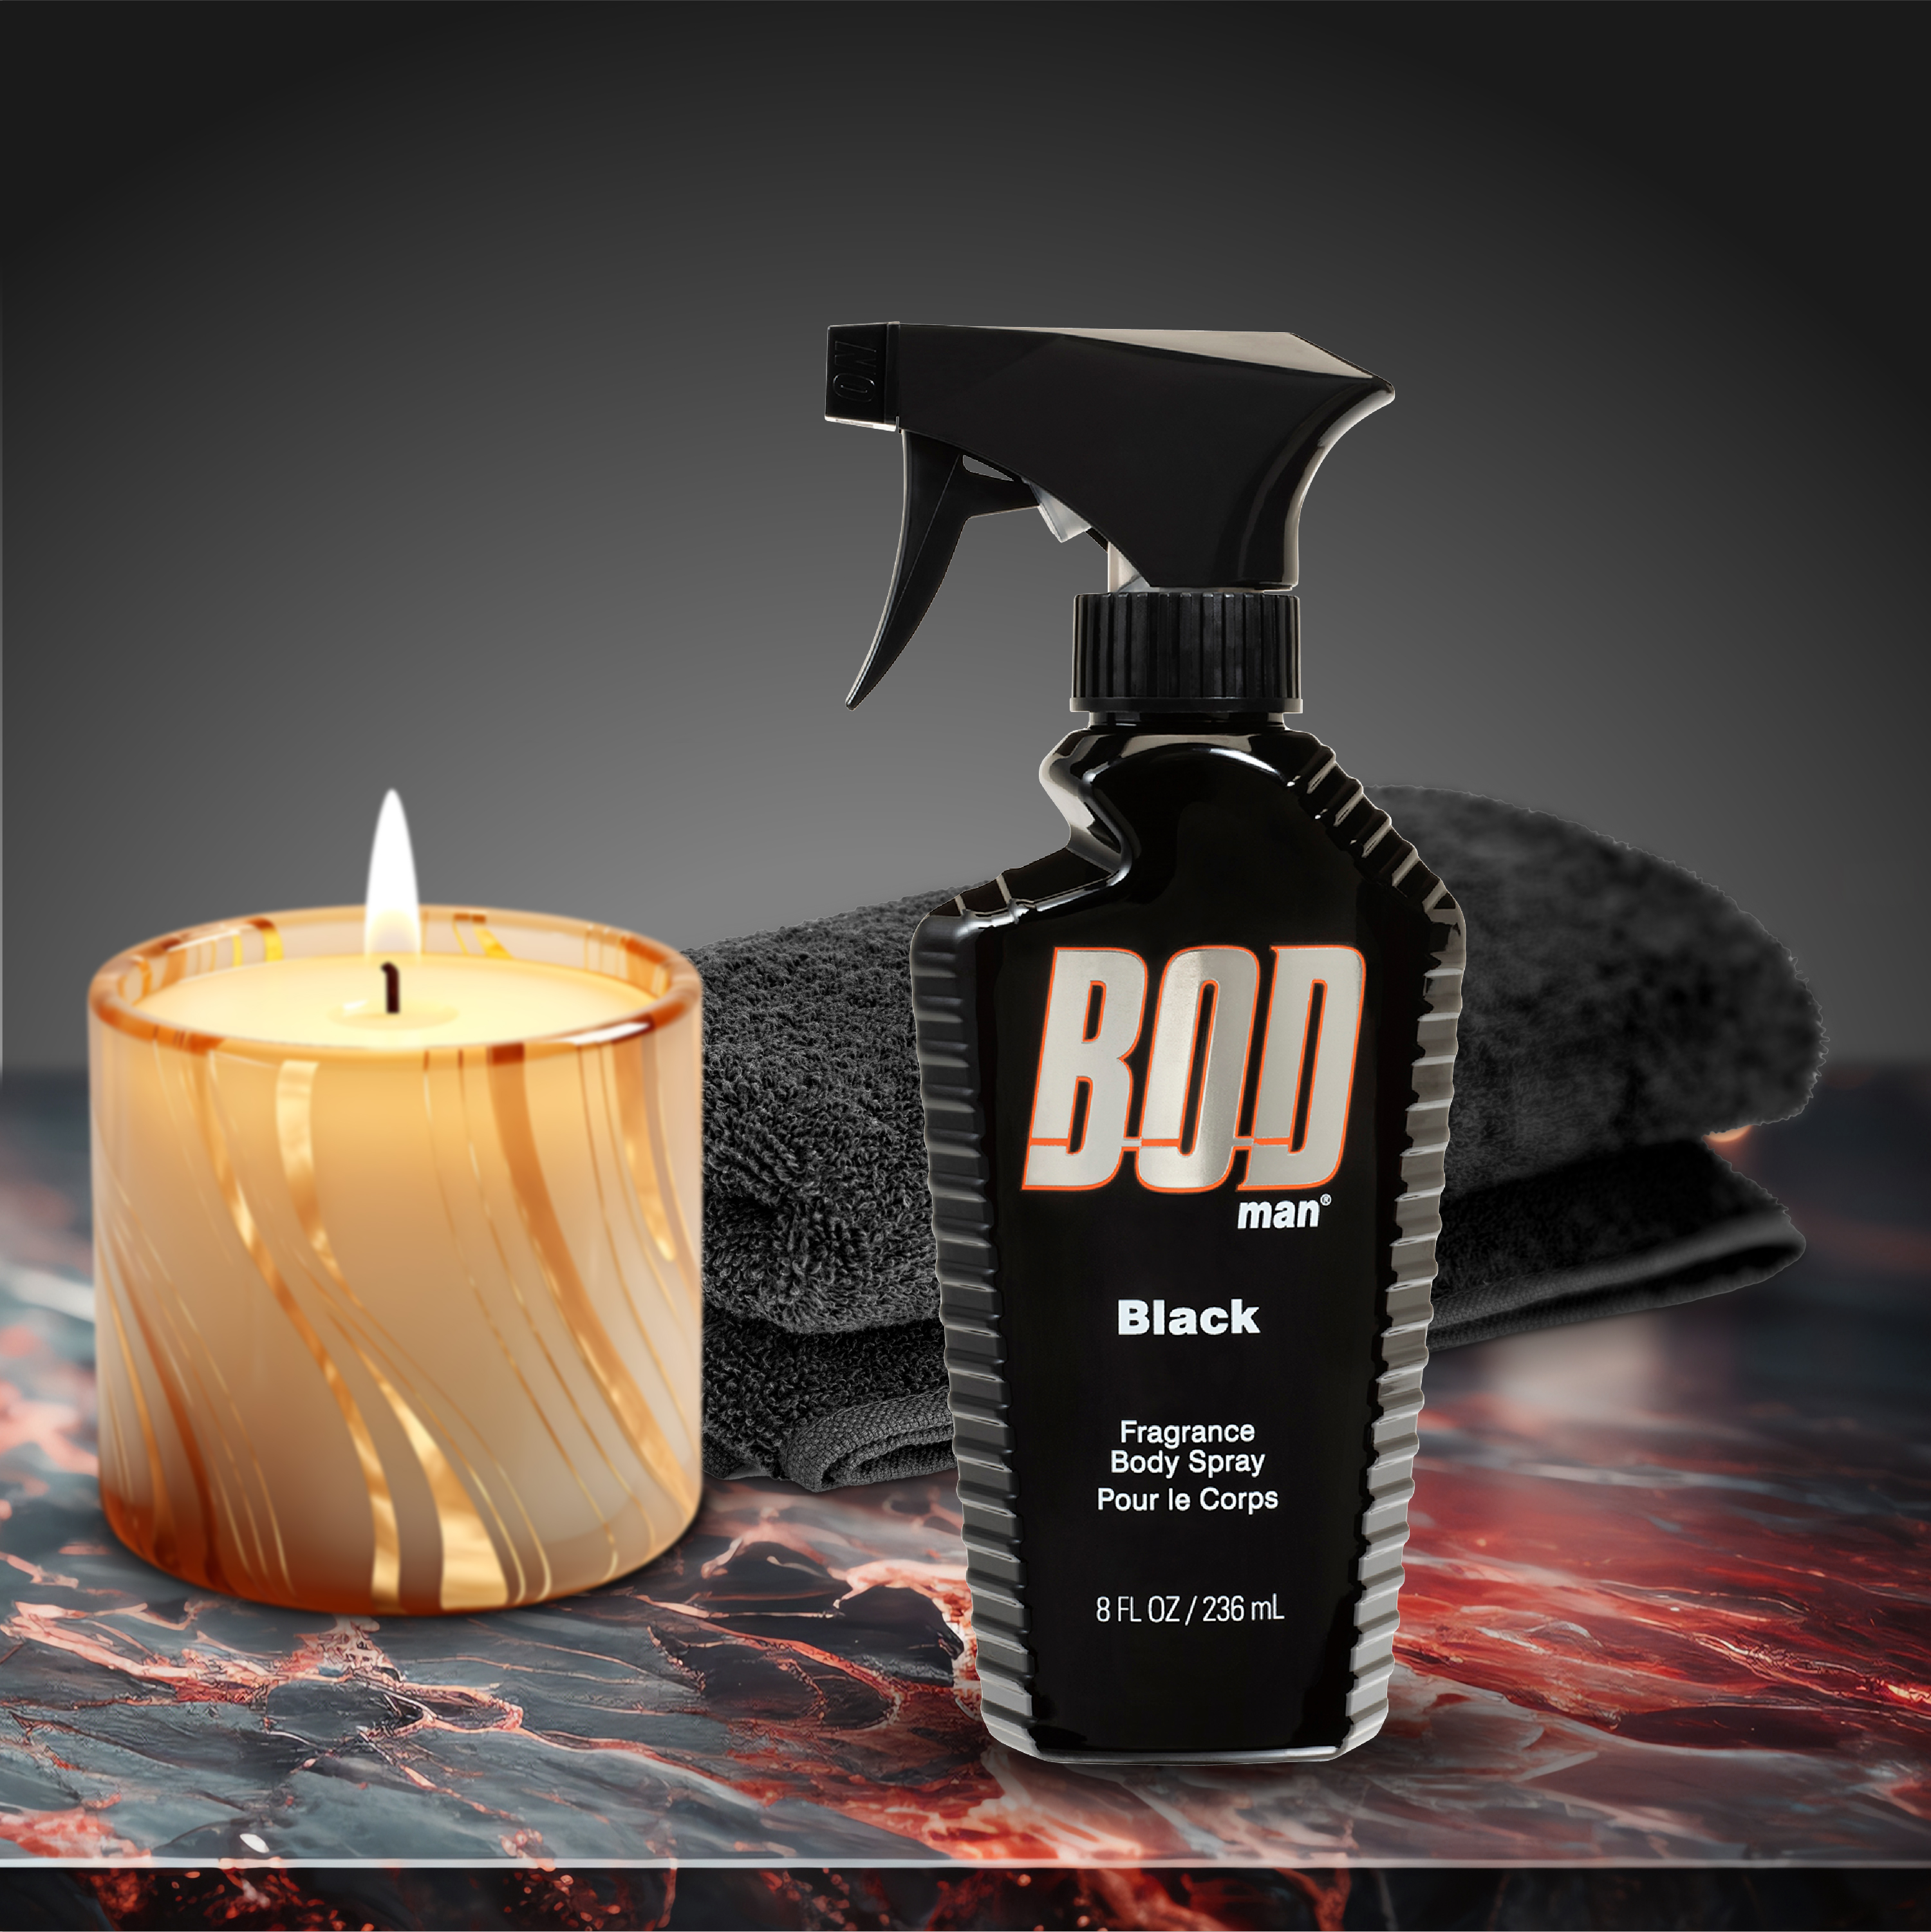 Bod Man Black Body Spray Fragrance, 8 fl.oz. - image 4 of 7